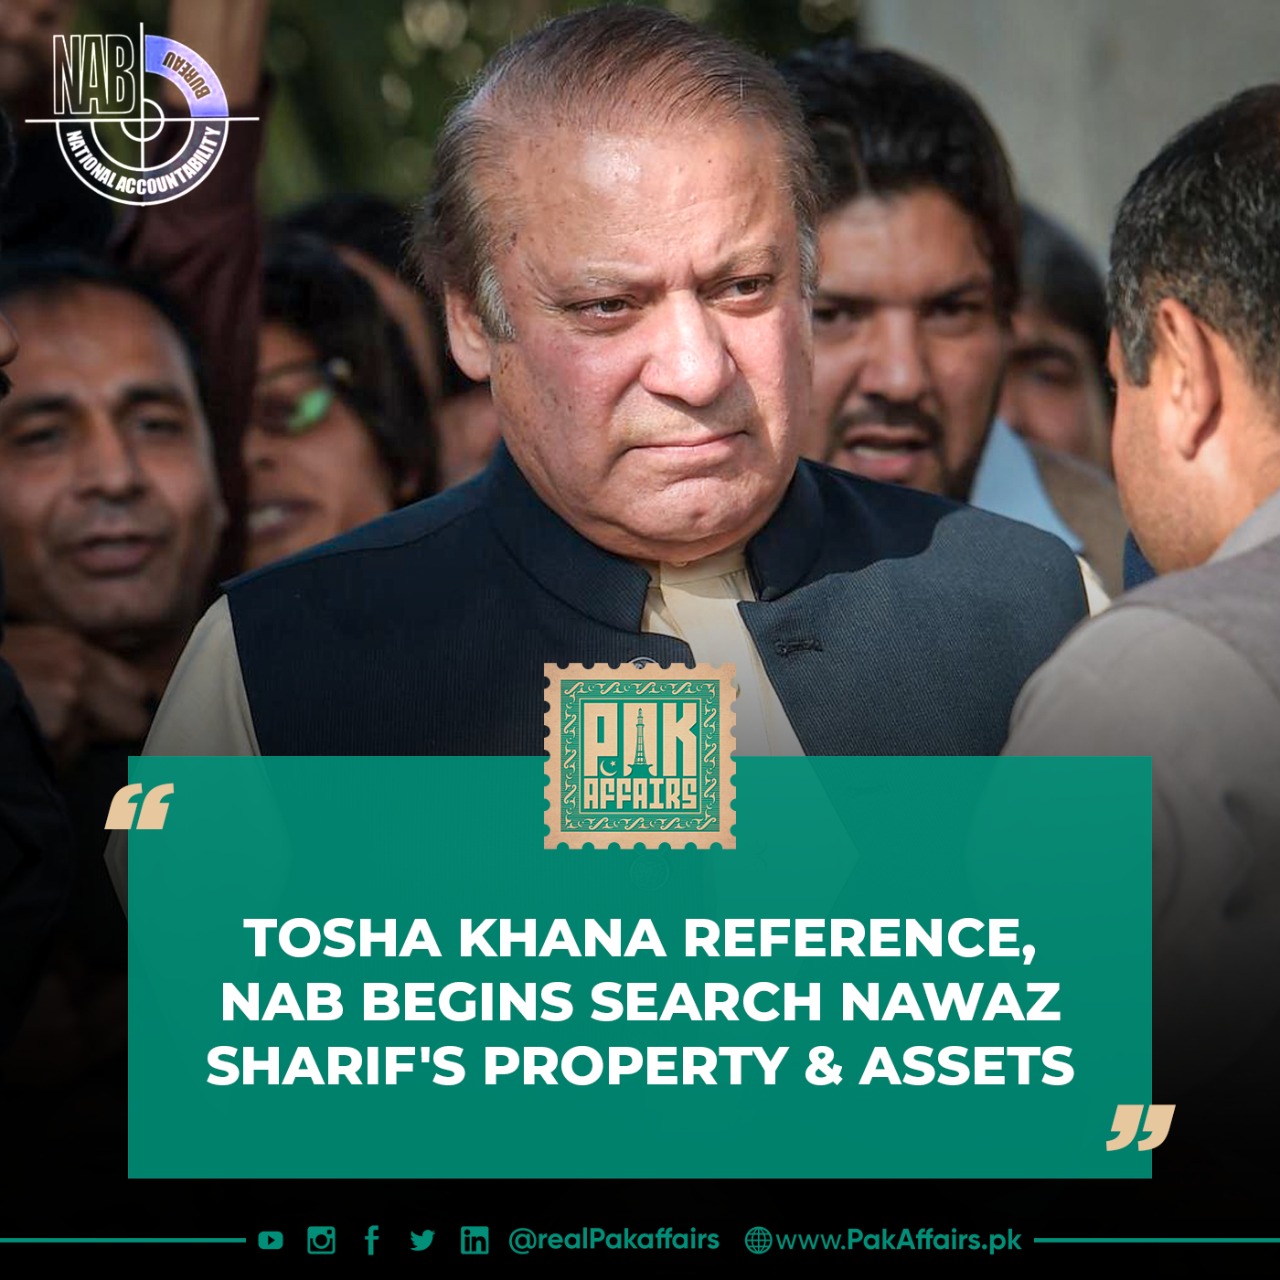 Tosha Khana reference, NAB begins search Nawaz Sharif's property and assets.